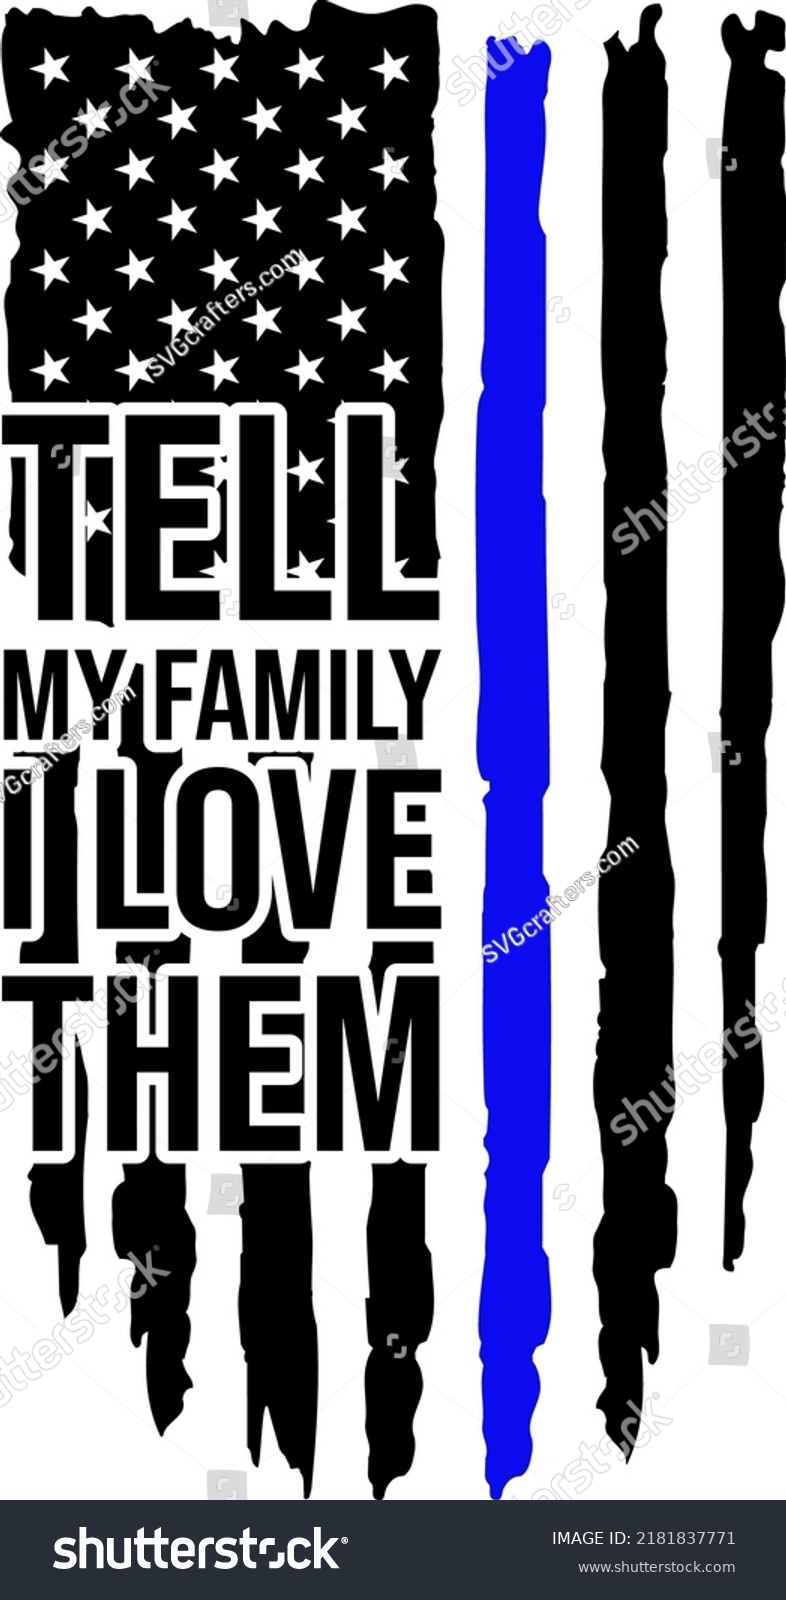 SVG of Police Eps illustration, Police Tell My Family I Love Them Blue Line Vector svg